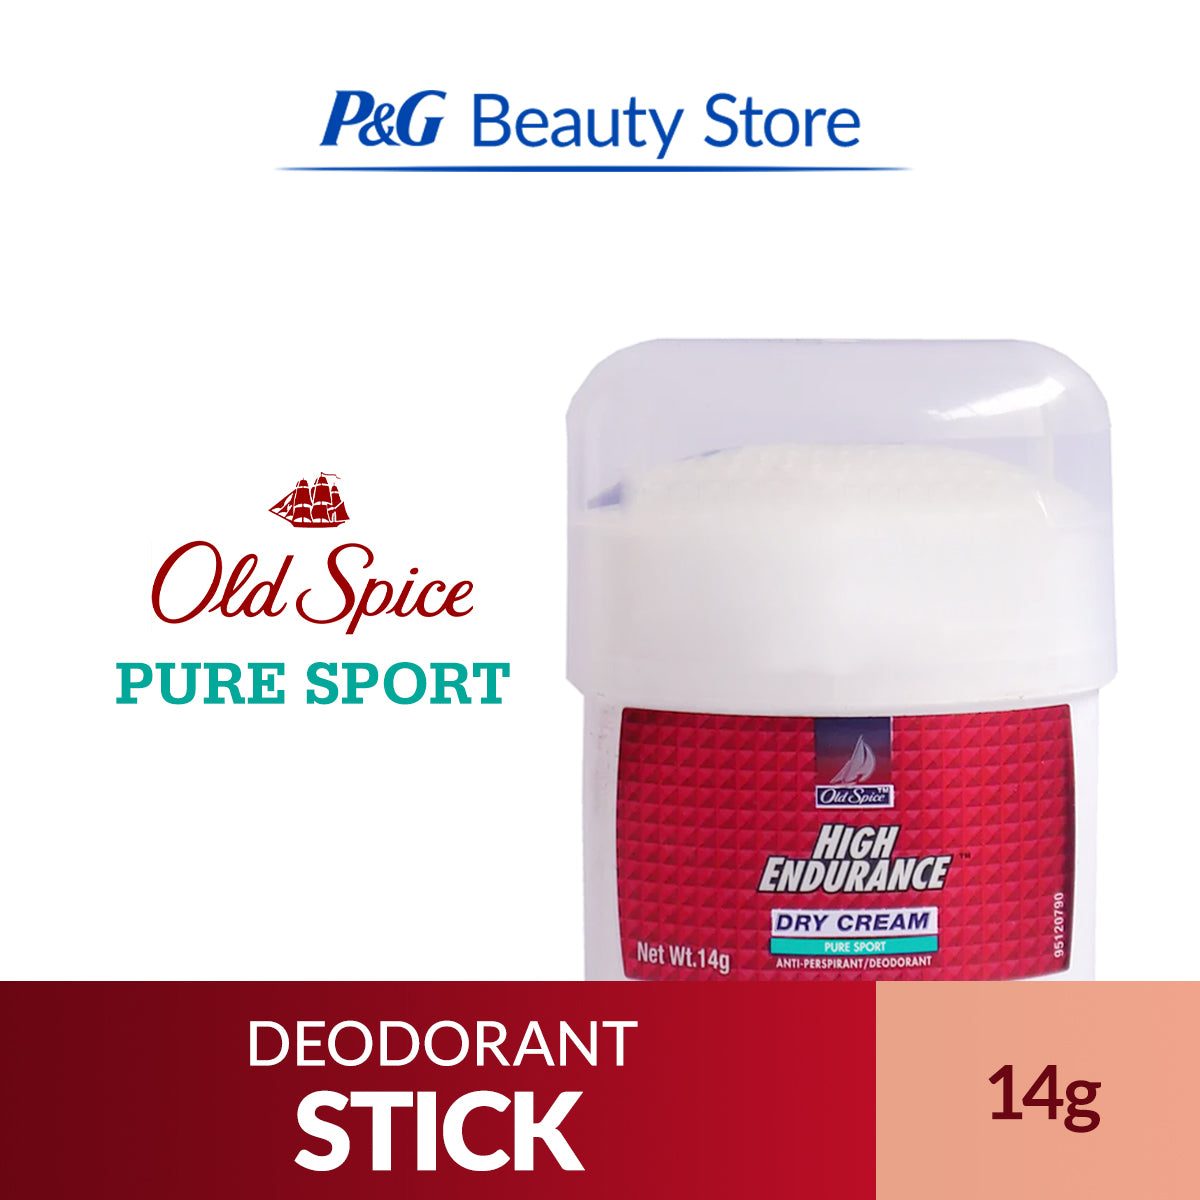 Old Spice High Endurance Cream Deodorant Pure Sport 14g